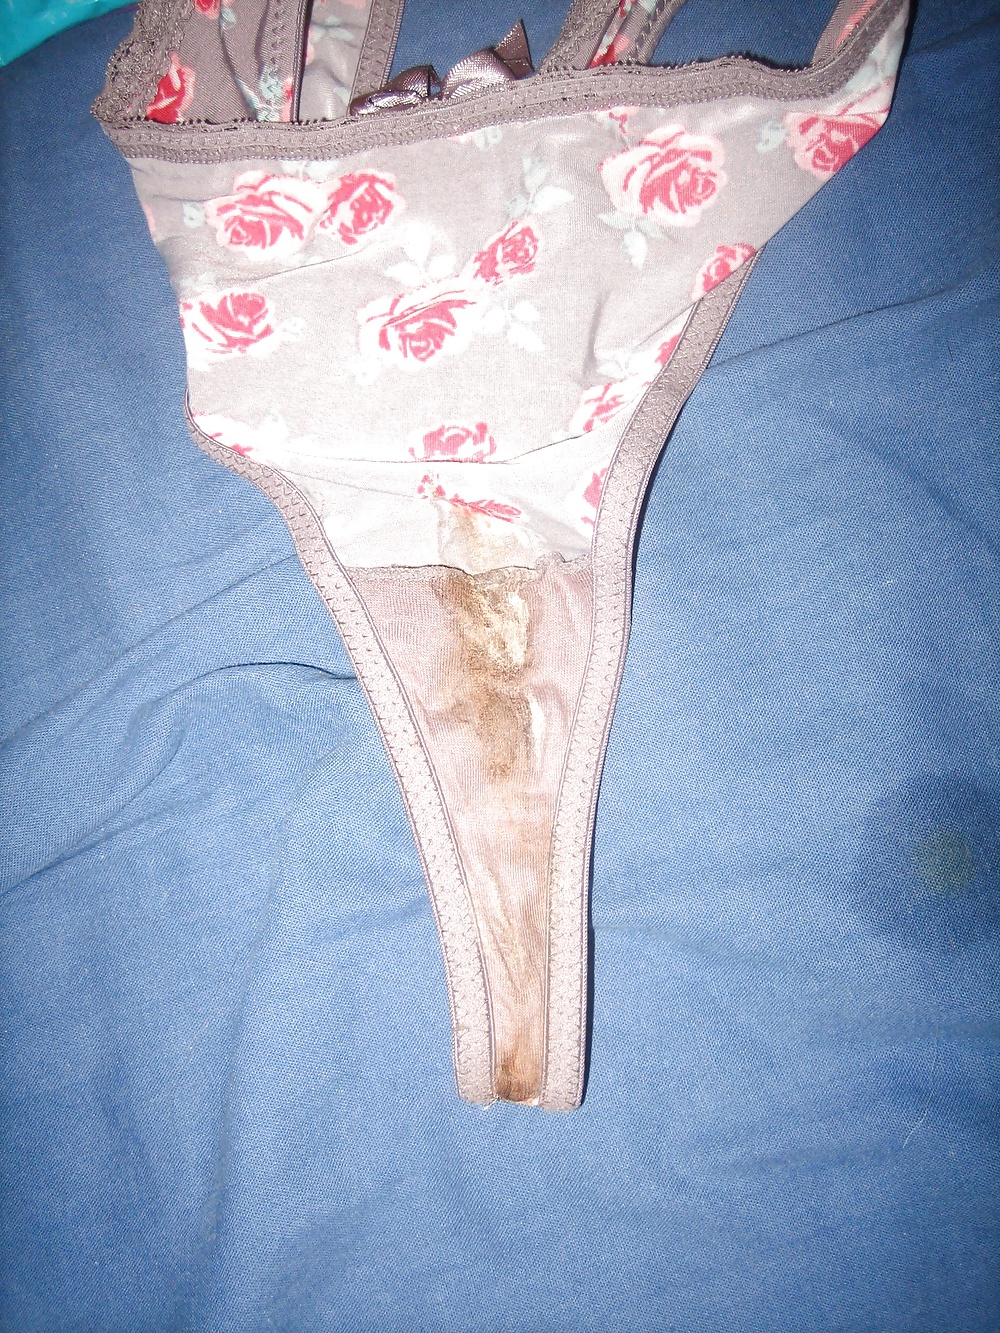 Oh,those dirty panties... #38691405